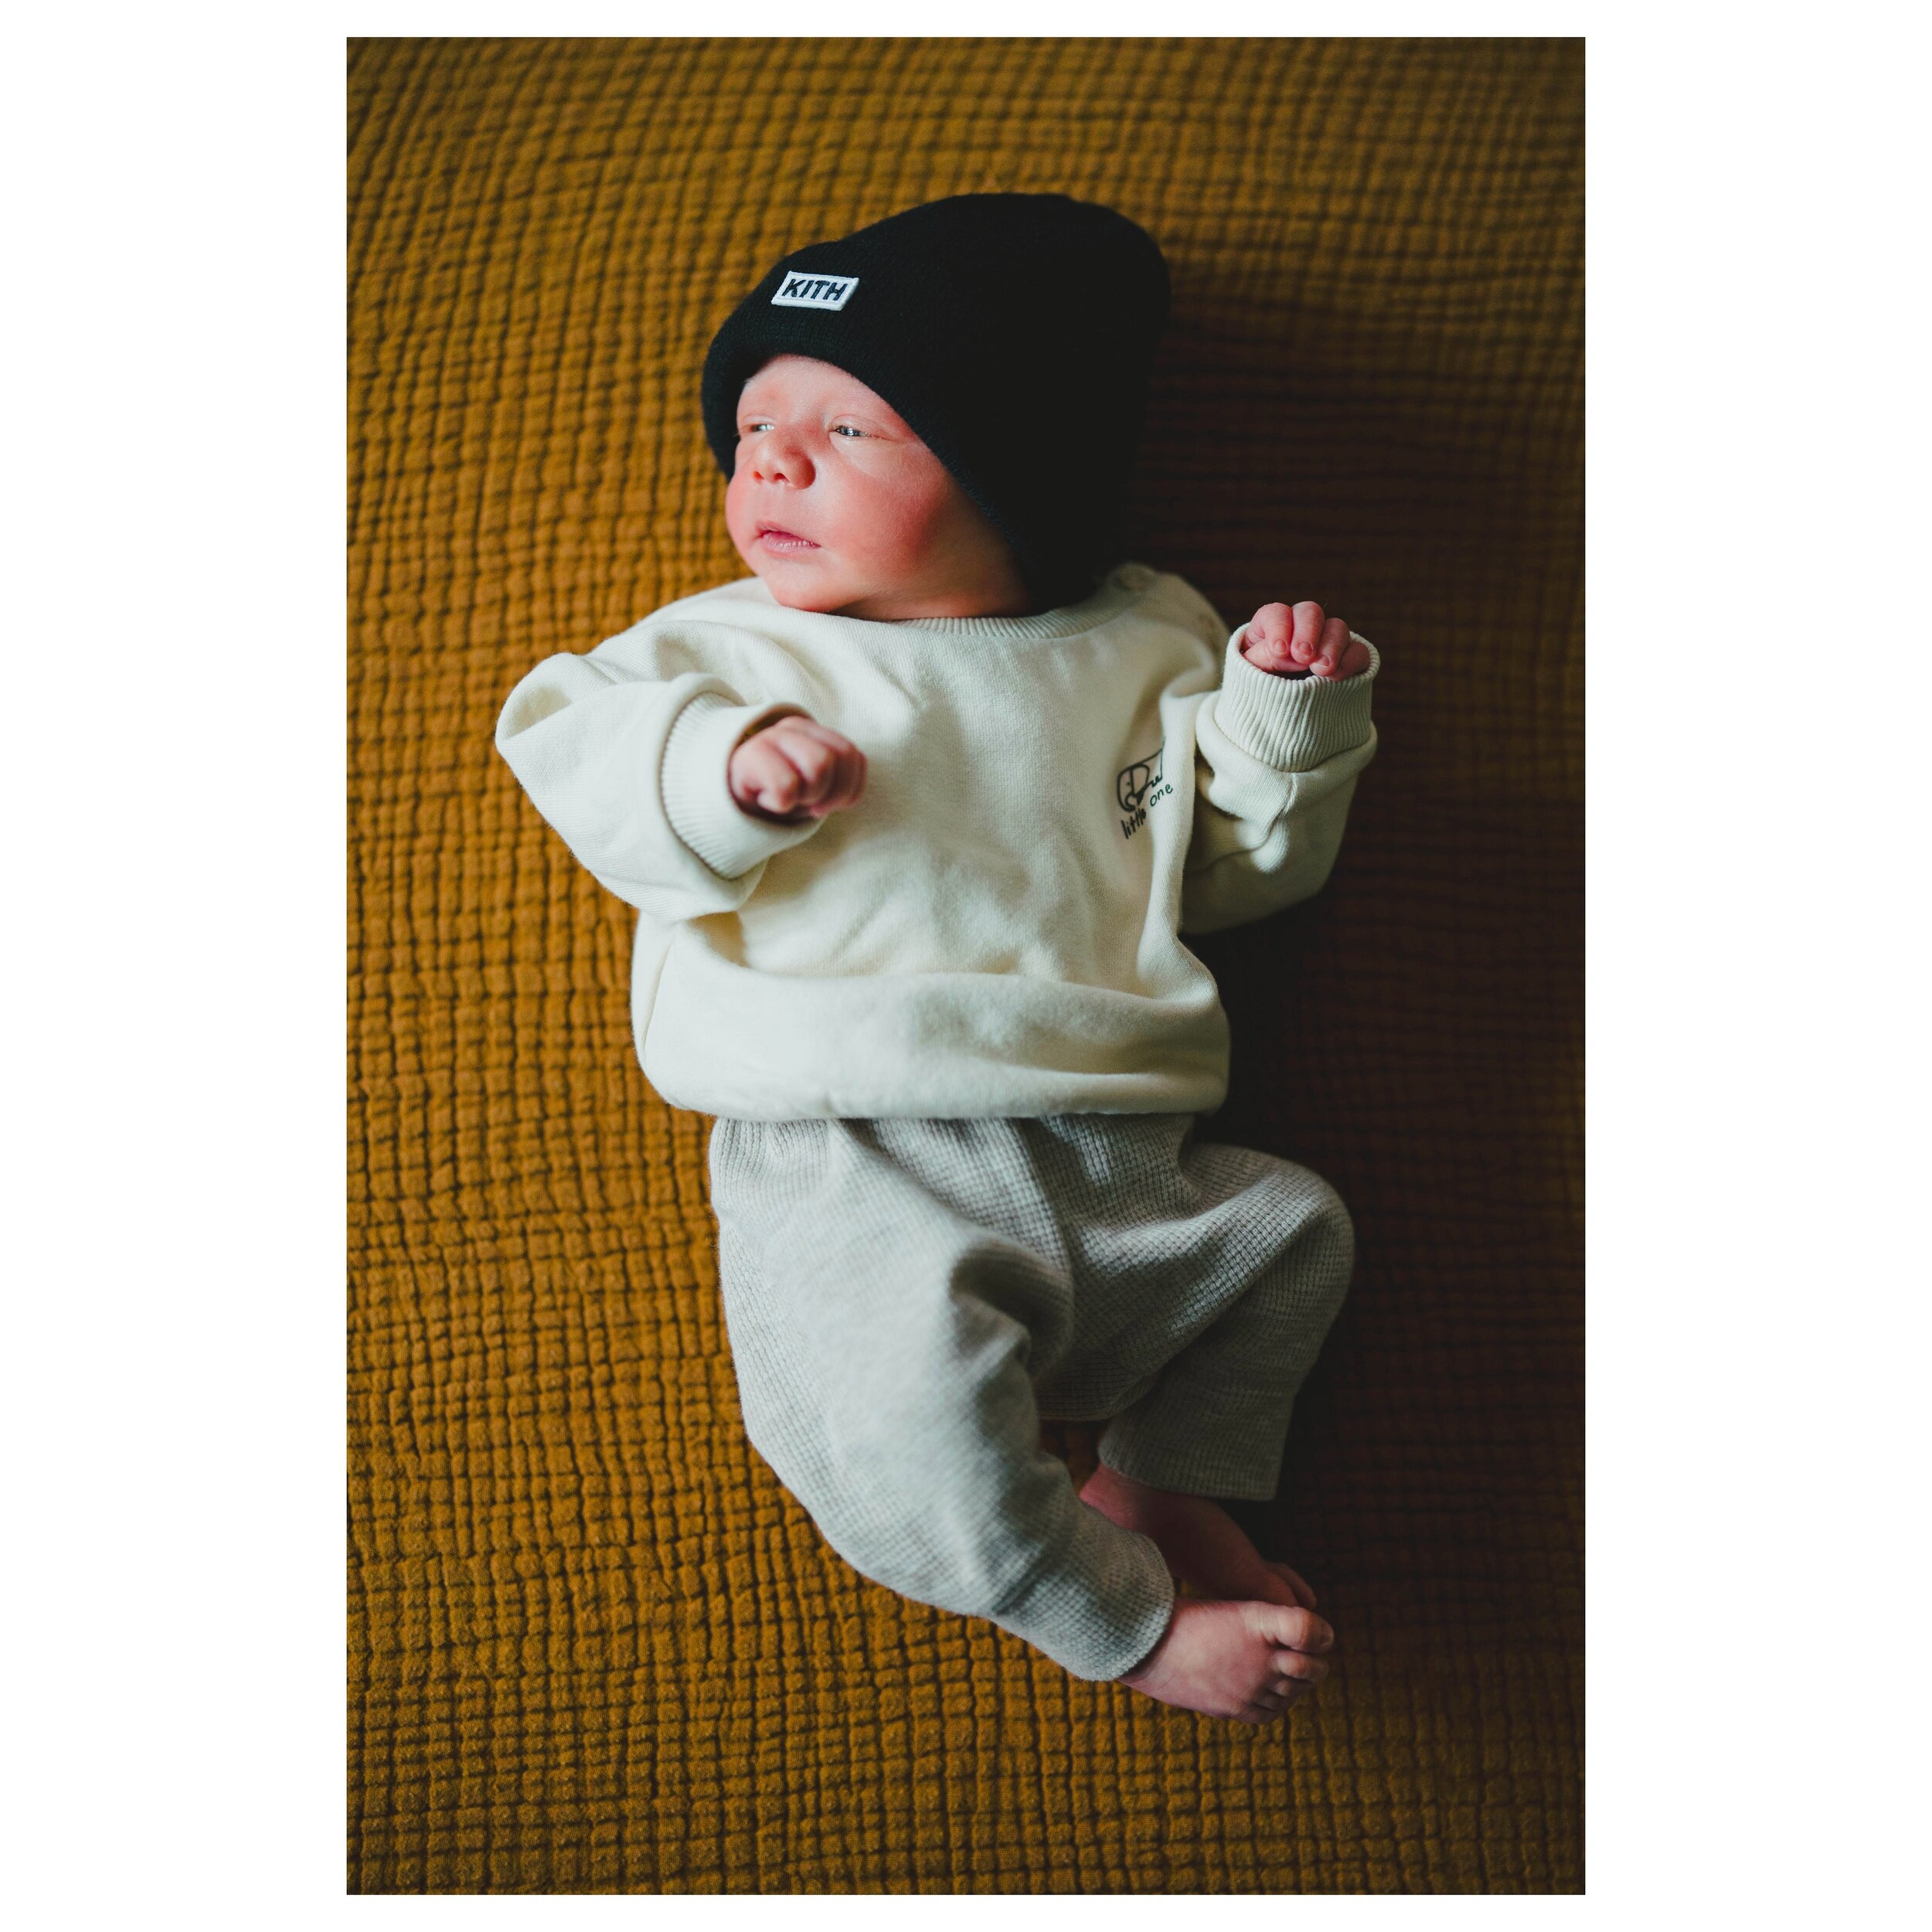 Introducing our little guy 𝗭𝗔𝗡𝗘 💙🤩

&bull;

#newbornphoto #newbornphotography #newbornphotographer #newborn #kith #kithbaby #sonya9 #sony50 #sony50mmf14 #sonygmaster